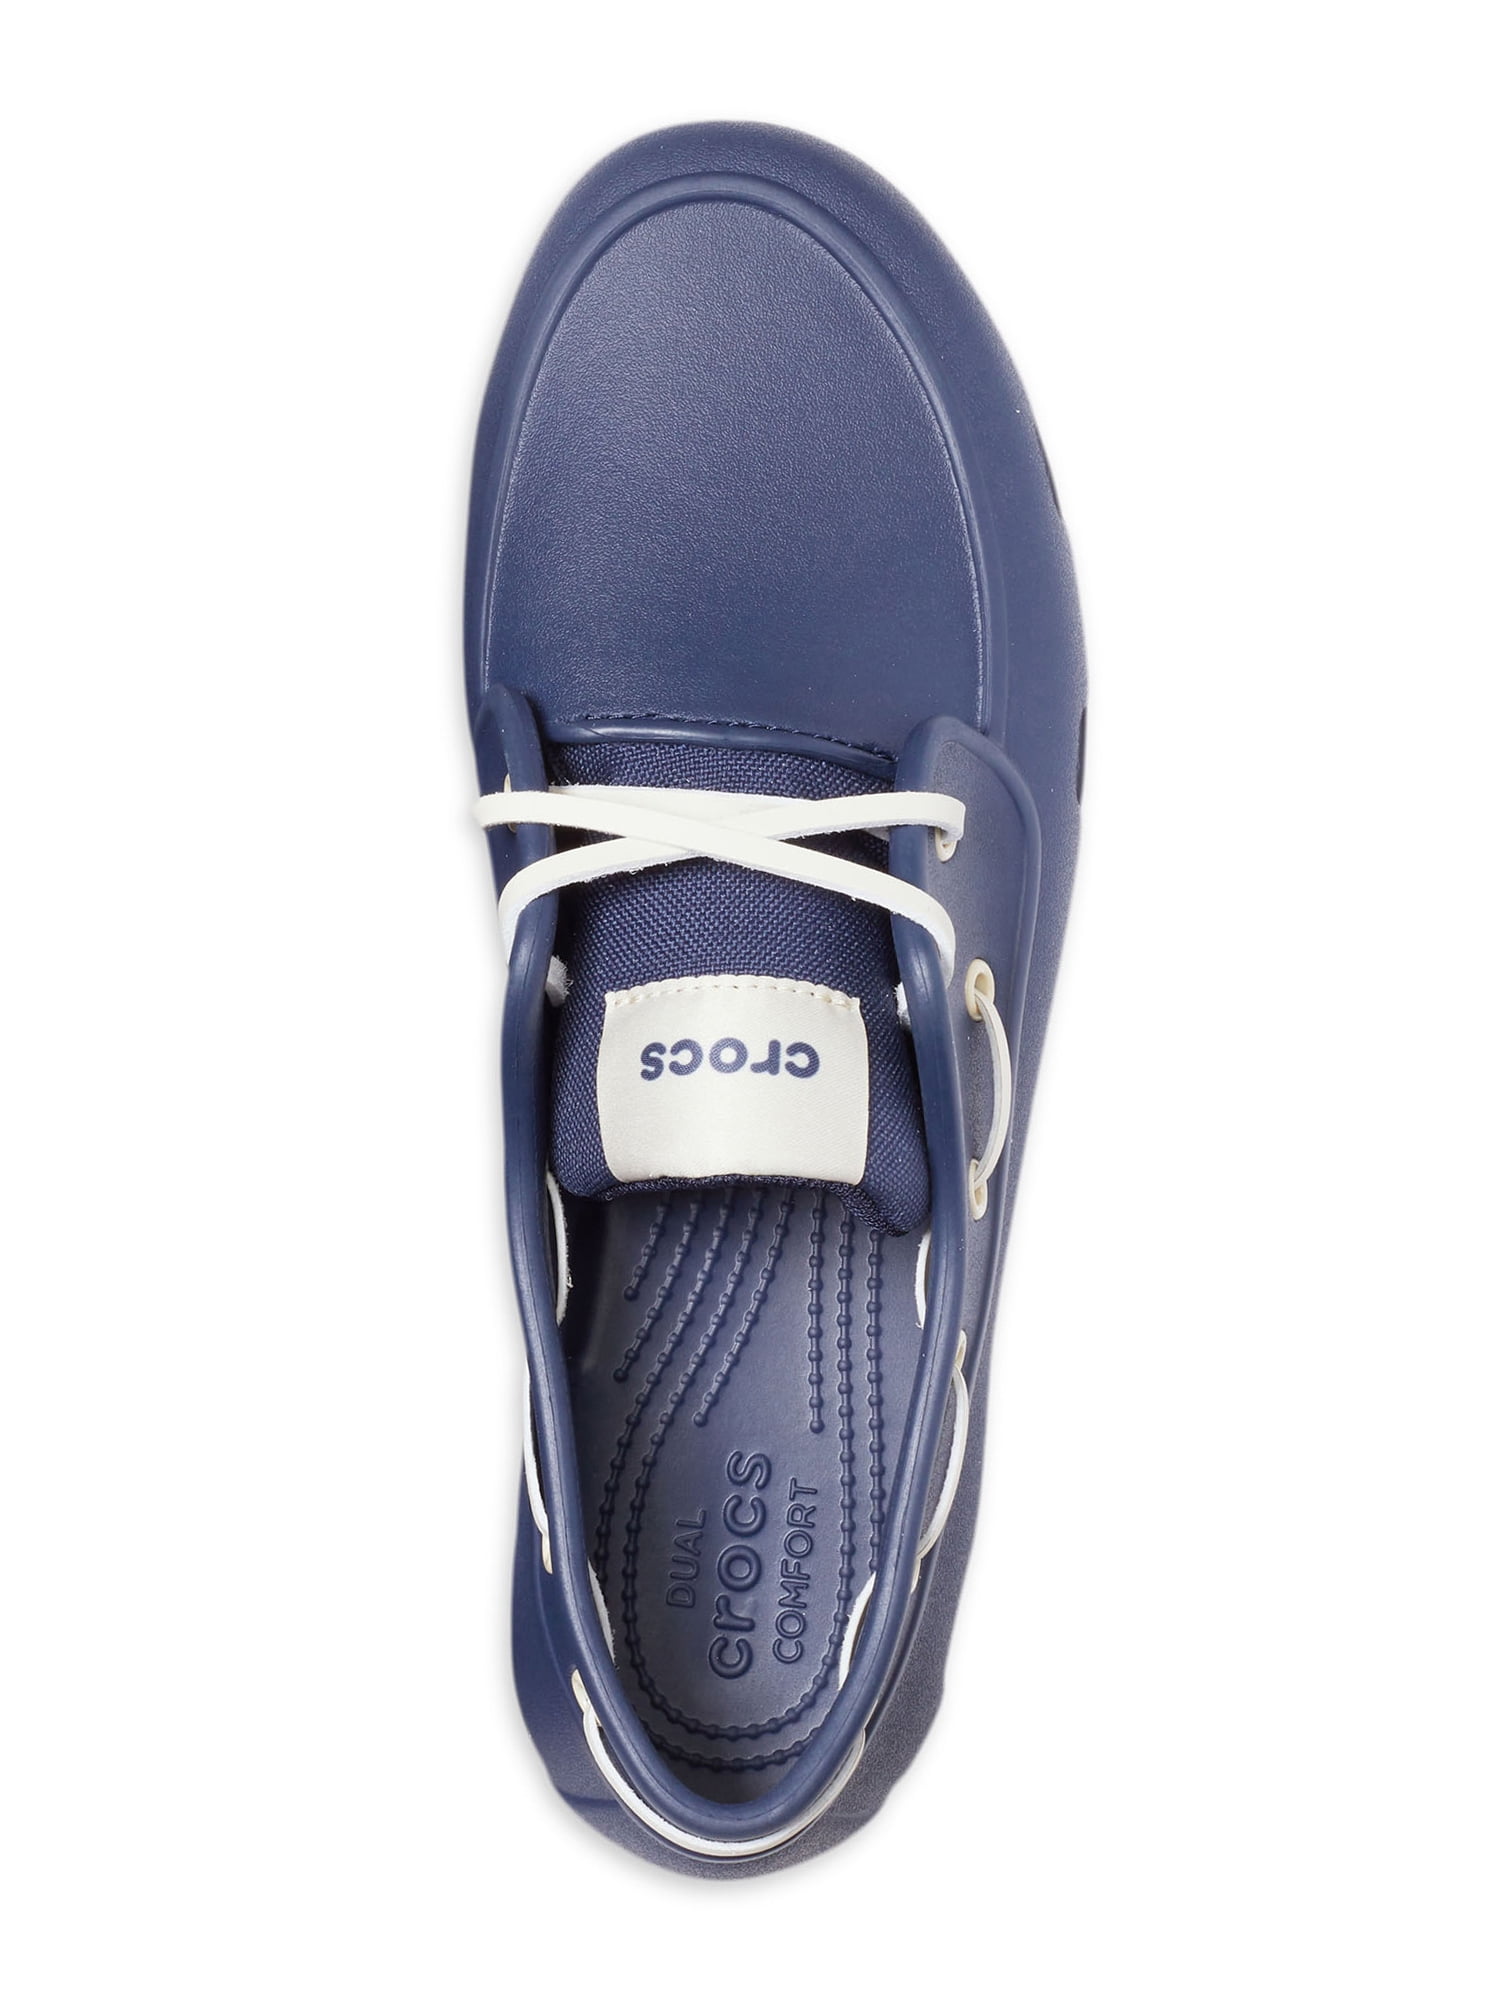 CROCS Harborline Nubuck M Loafers For Men - Buy Brown Color CROCS Harborline  Nubuck M Loafers For Men Online at Best Price - Shop Online for Footwears  in India | Flipkart.com